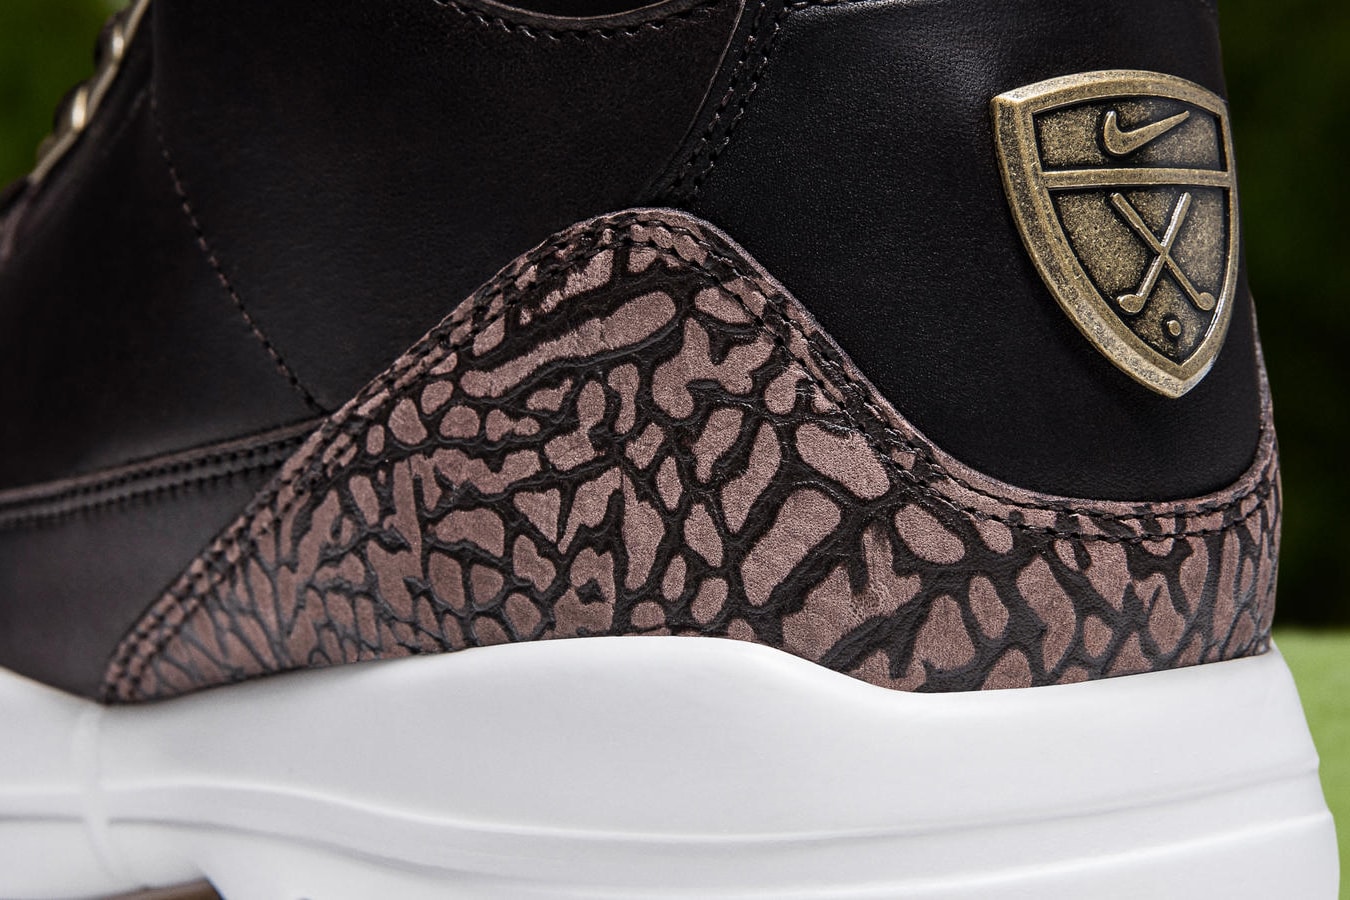 Air Jordan 3 Golf white cement bronze brown premium footwear release date details info drops february 16 2018